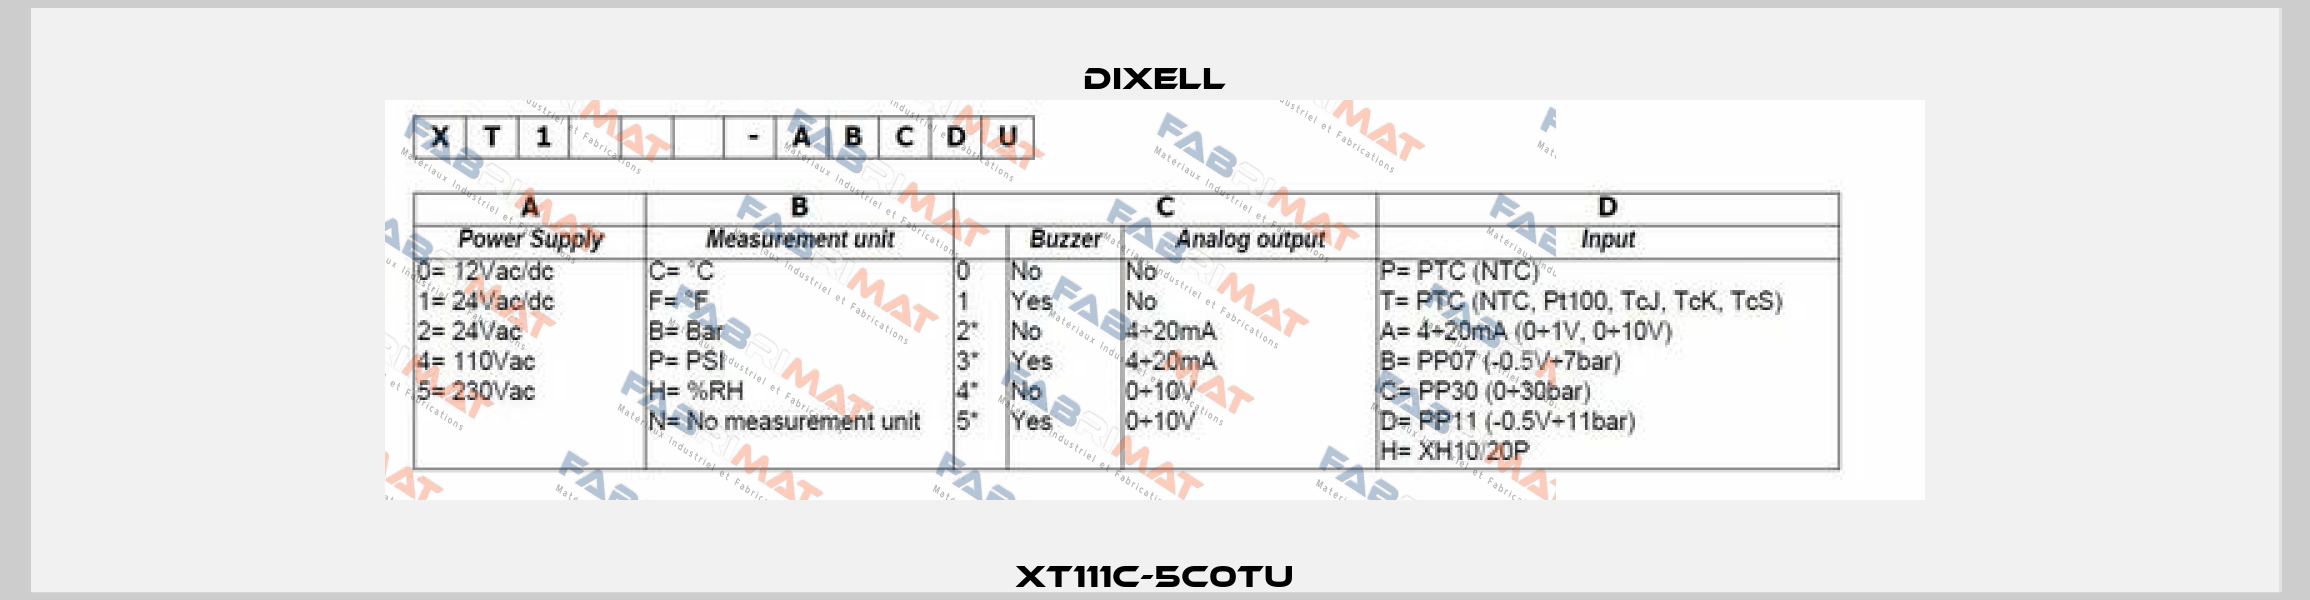 XT111C-5C0TU Dixell